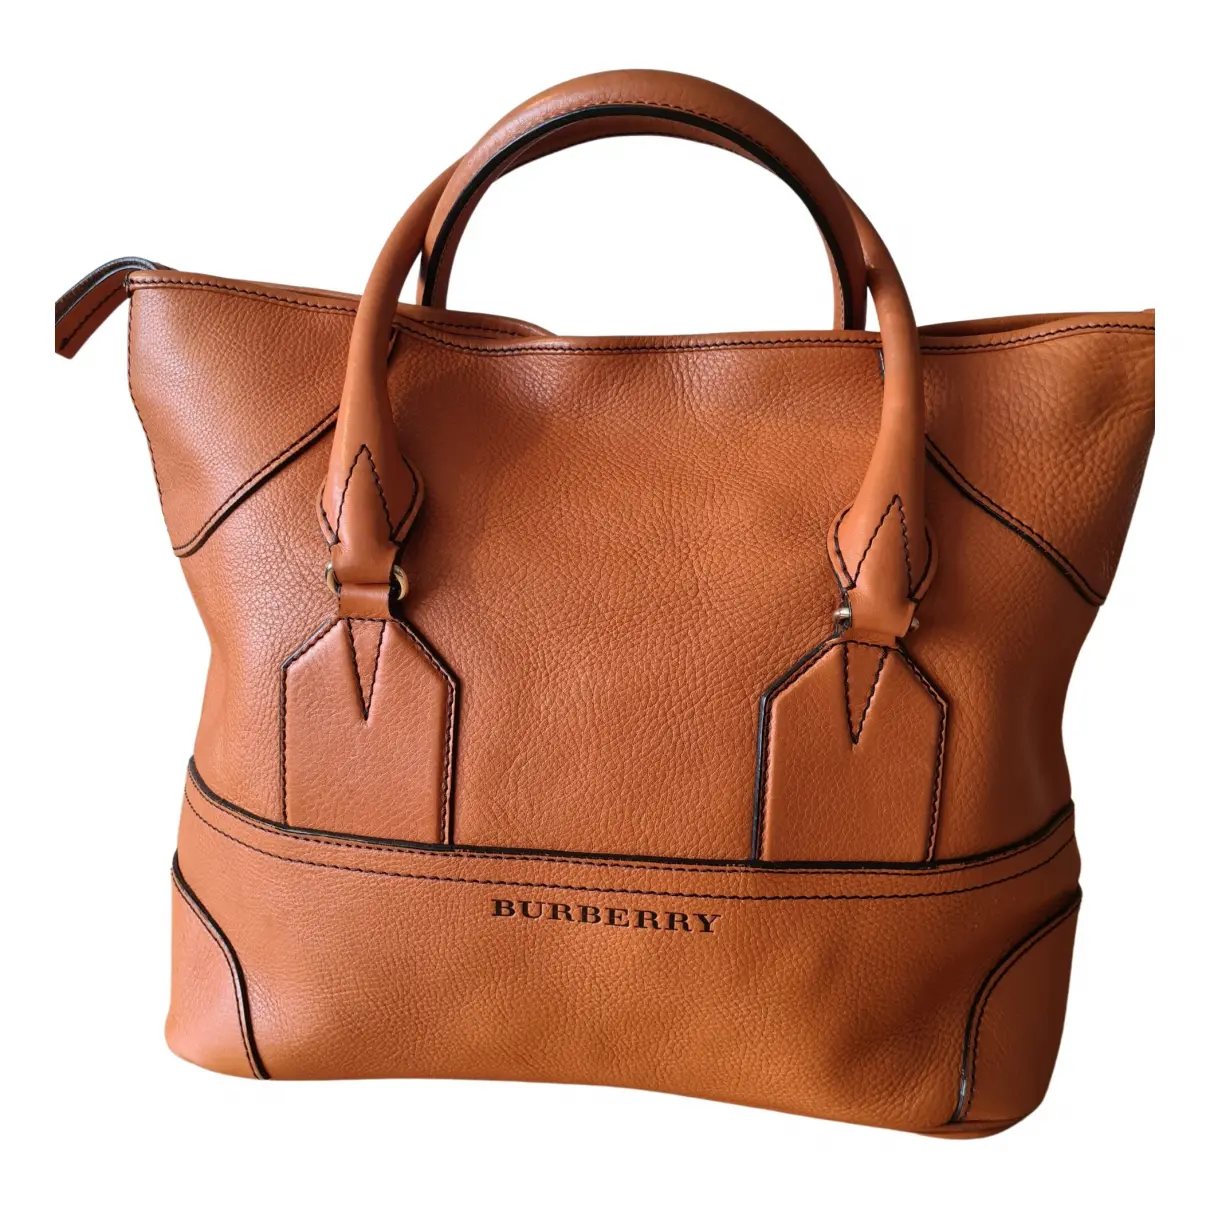 The Giant leather handbag Burberry